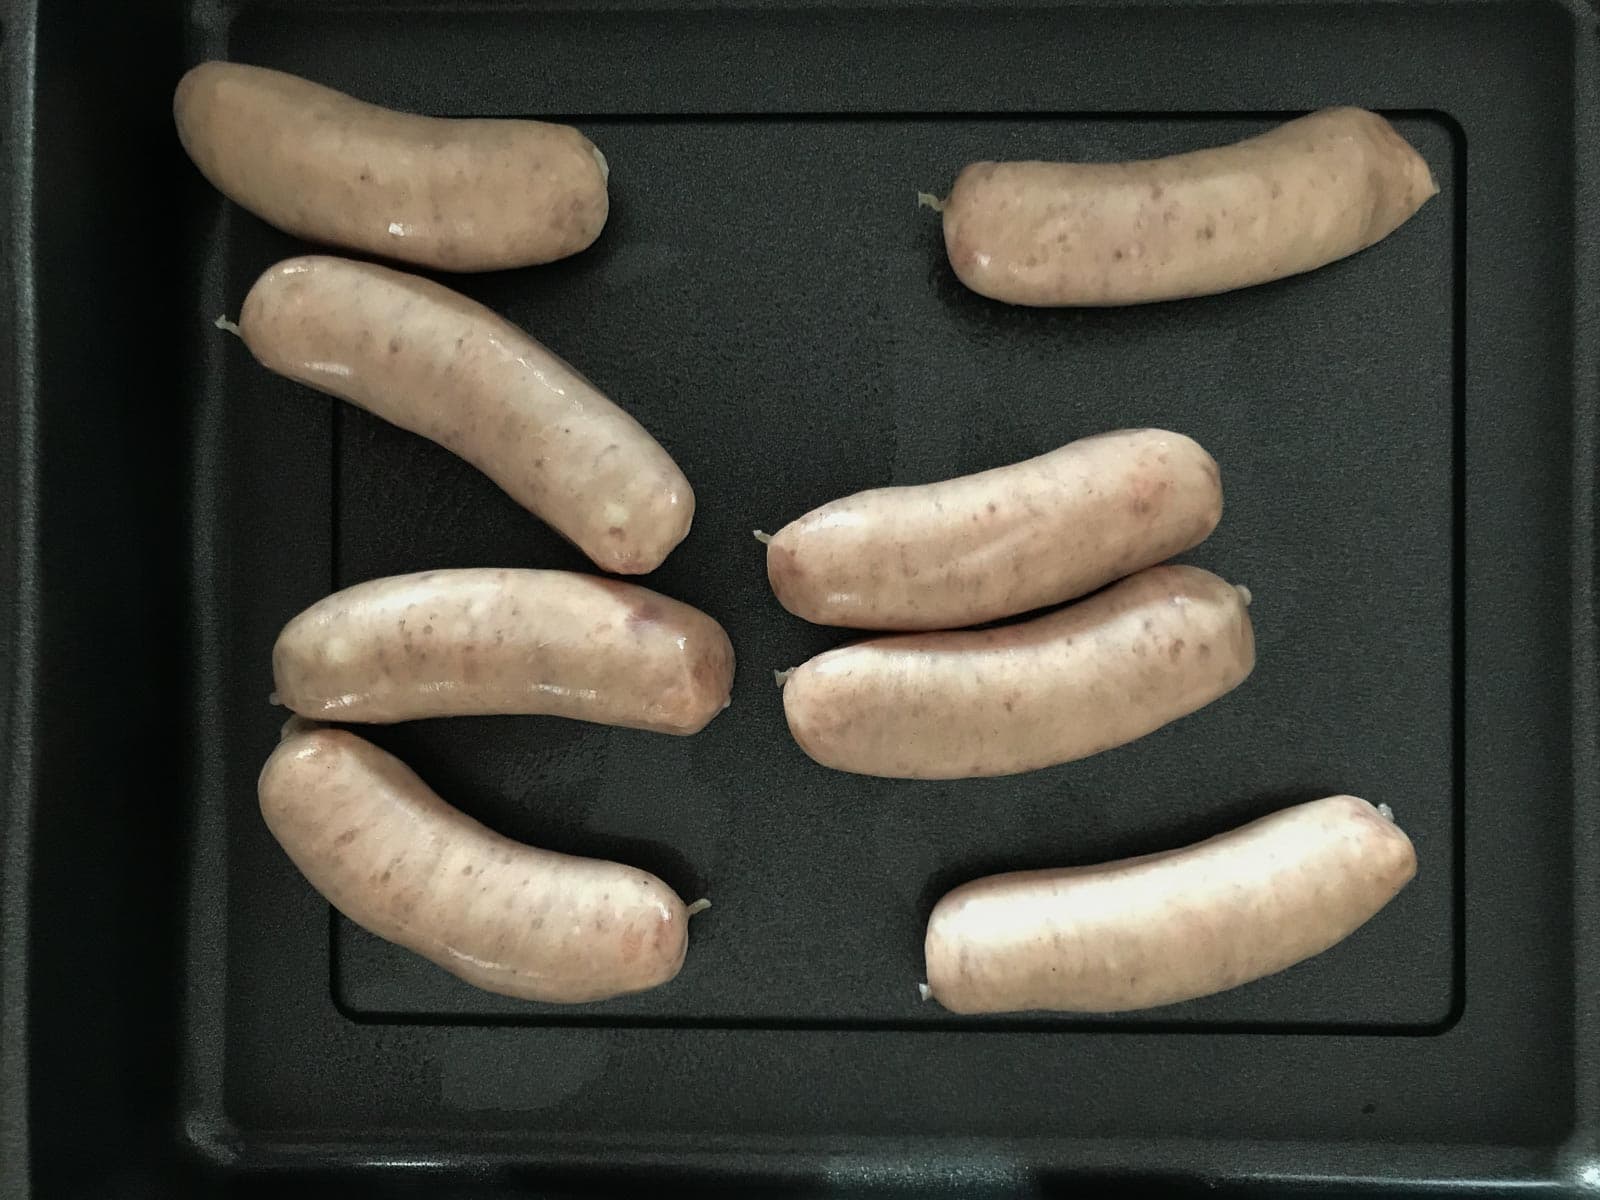 8 plain pork sausages on a black metal roasting tray.